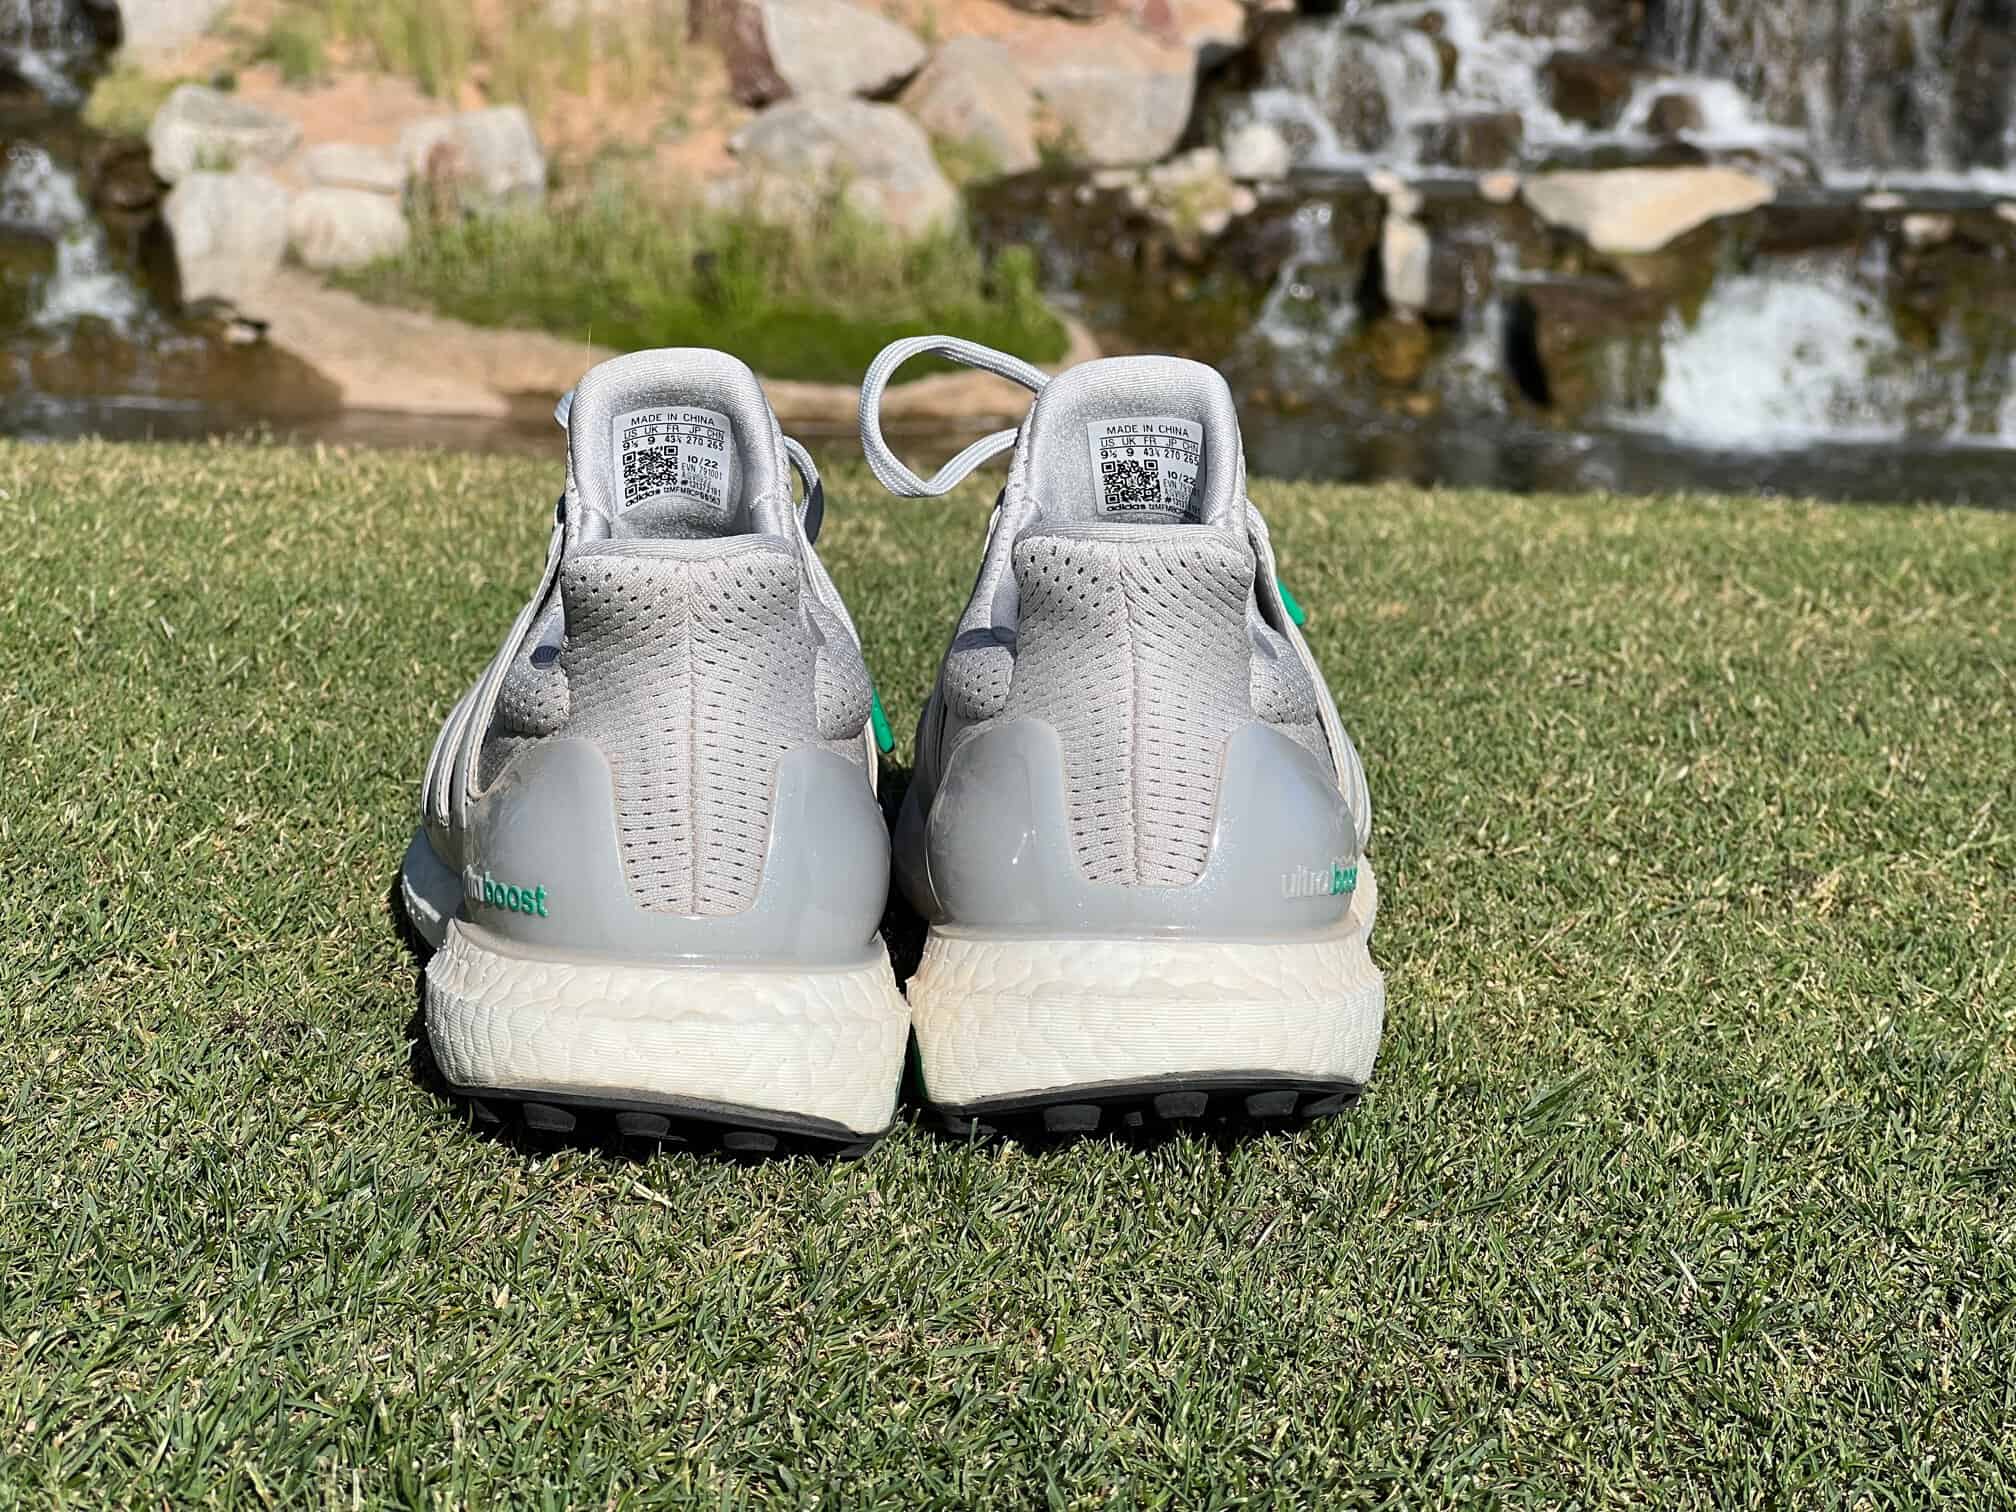 Adidas Ultraboost Spikeless Golf Shoes Review - Independent Golf